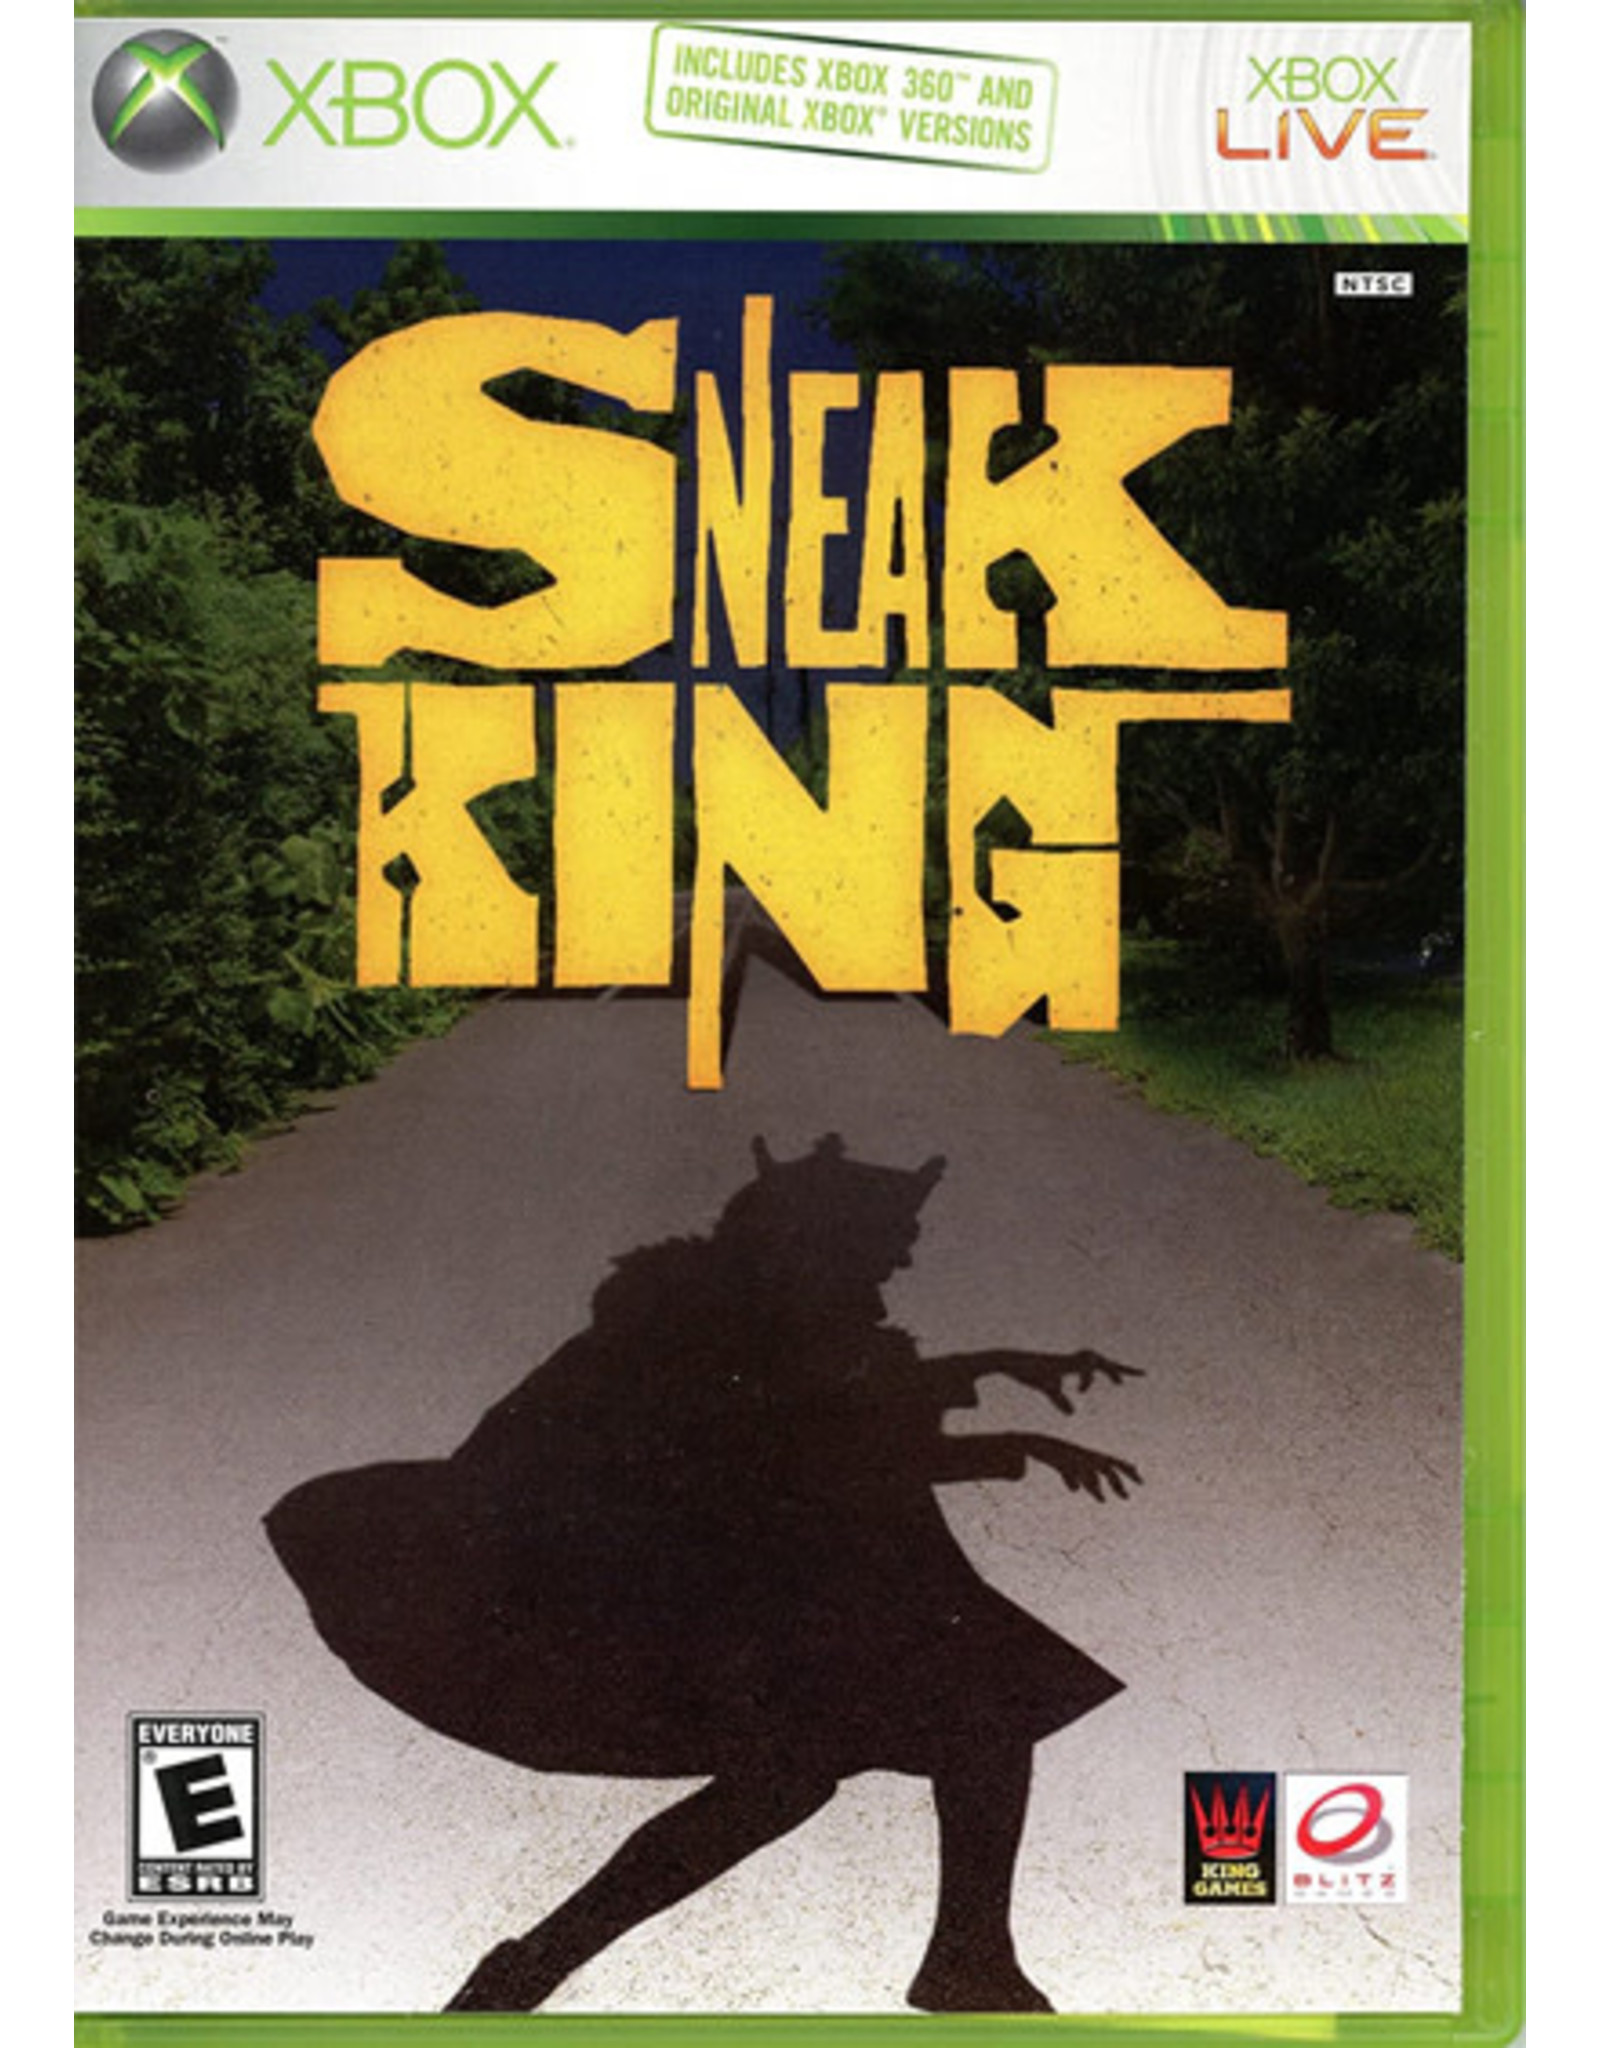 Xbox 360 Sneak King (Brand New)